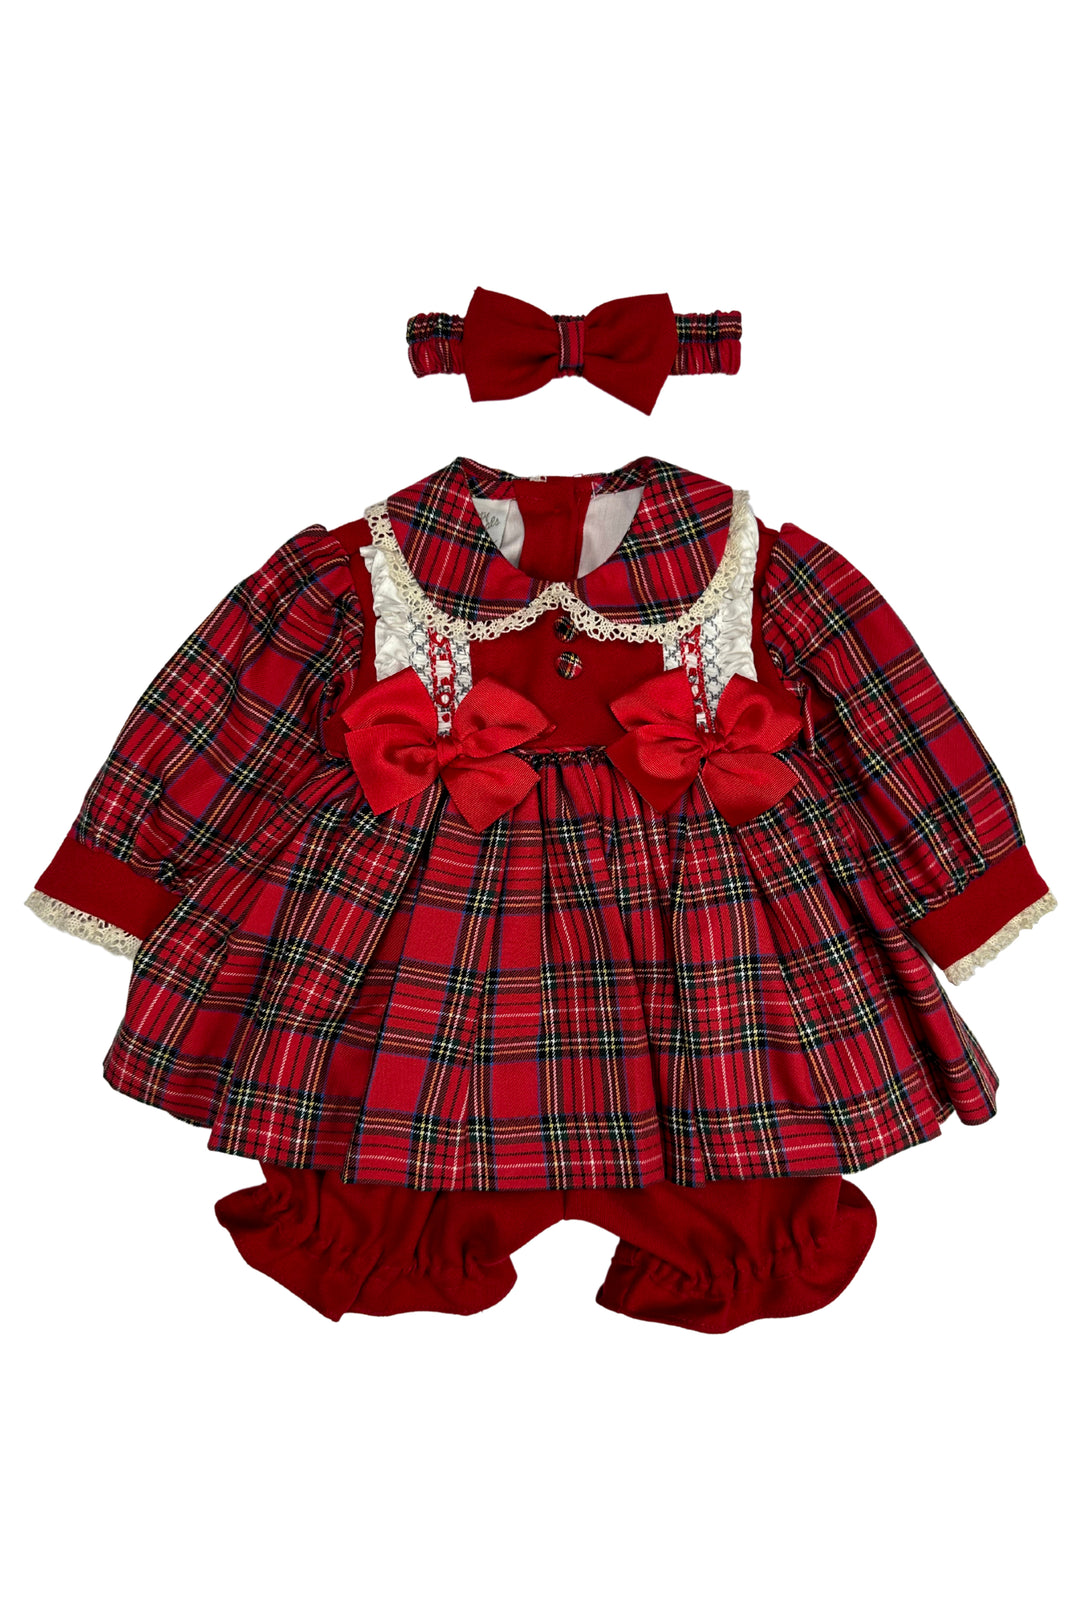 Pretty Originals "Dolly" Red Tartan Smocked Dress, Bloomers & Headband | Millie and John